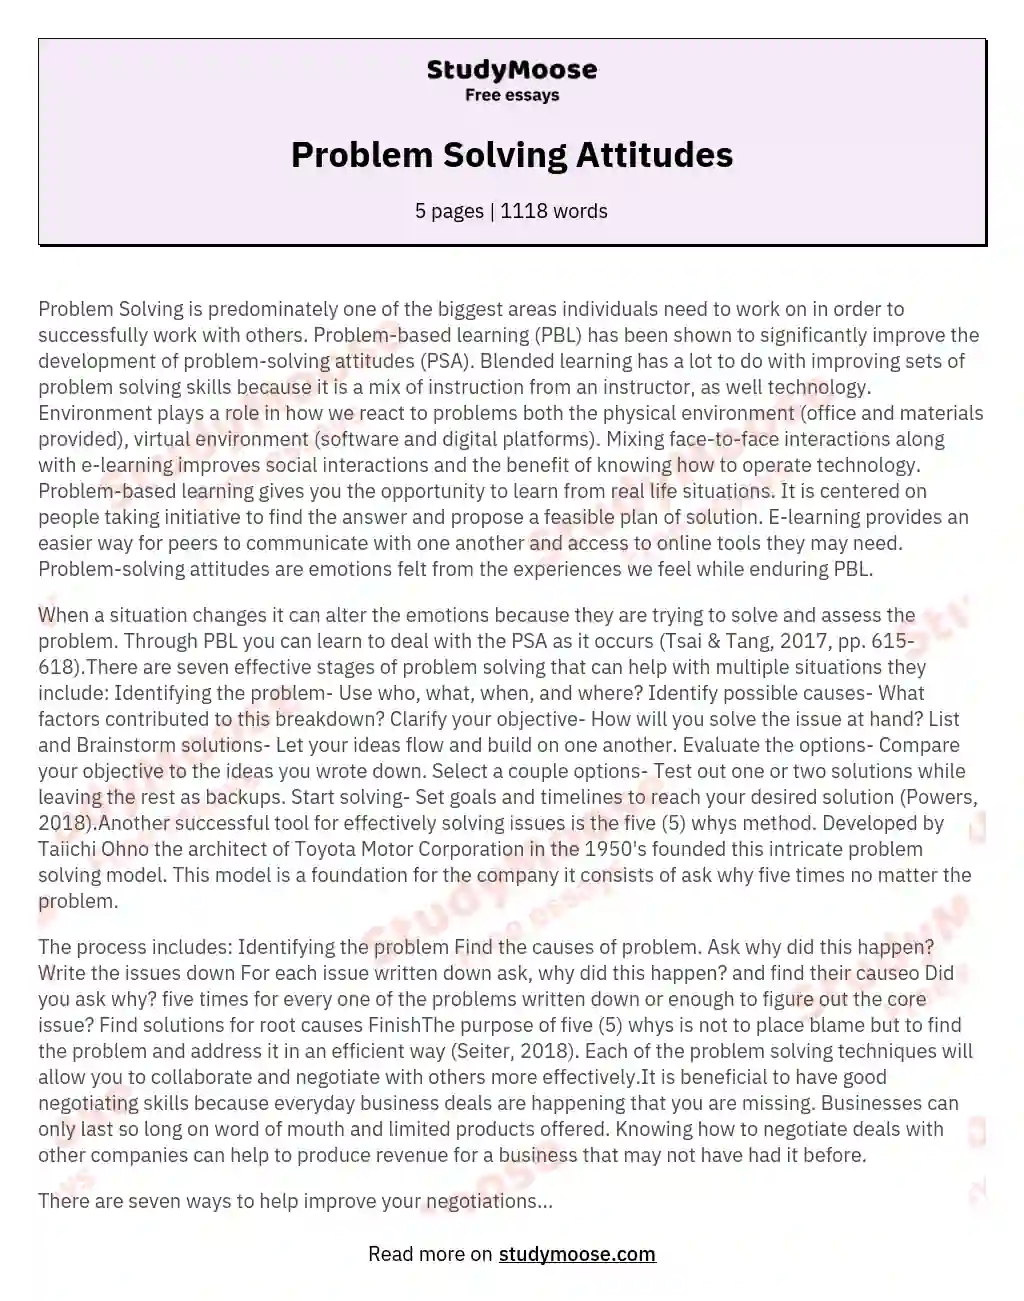 Problem Solving Attitudes essay